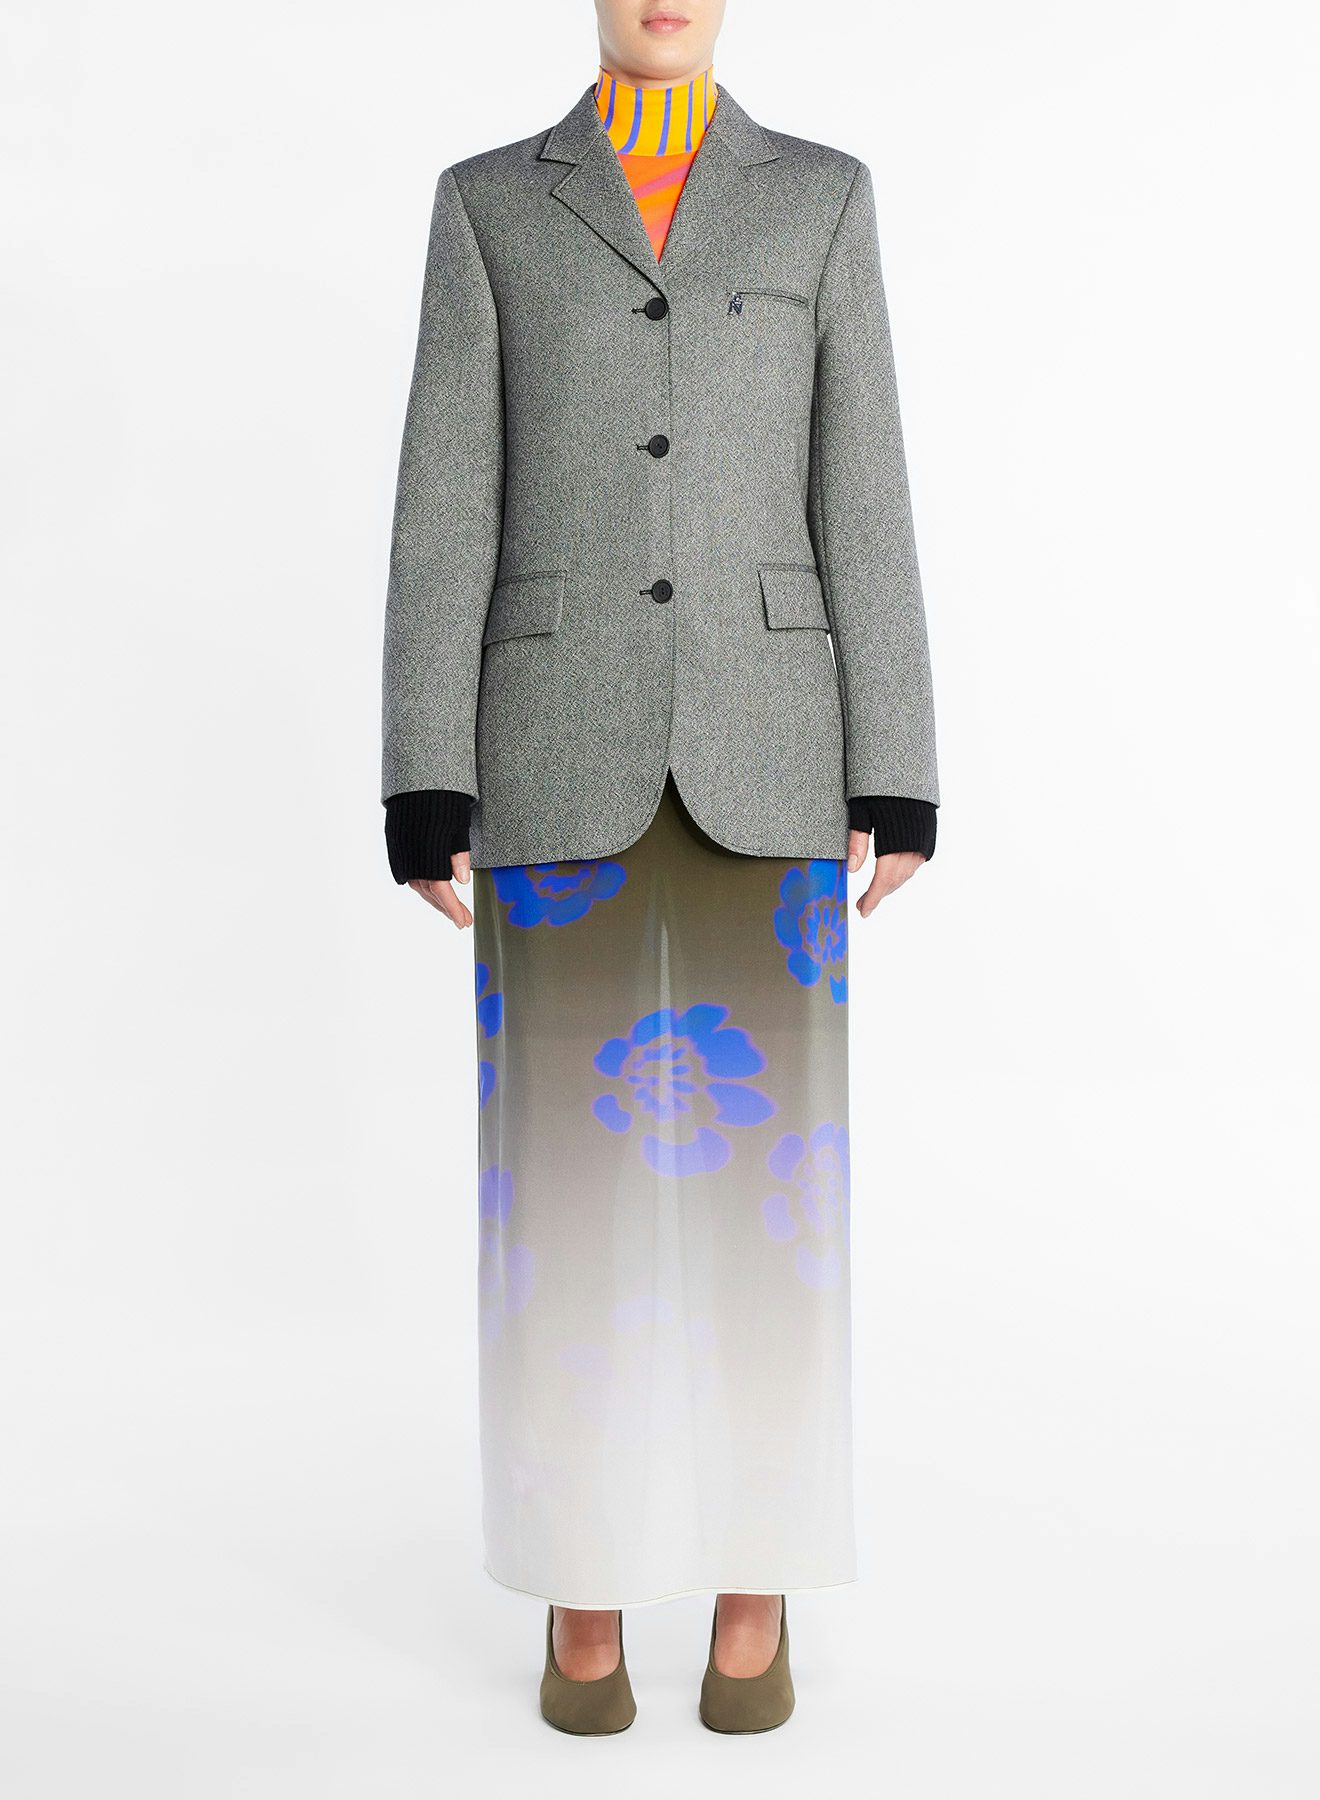 Speckled wool jacket black white - Nina Ricci